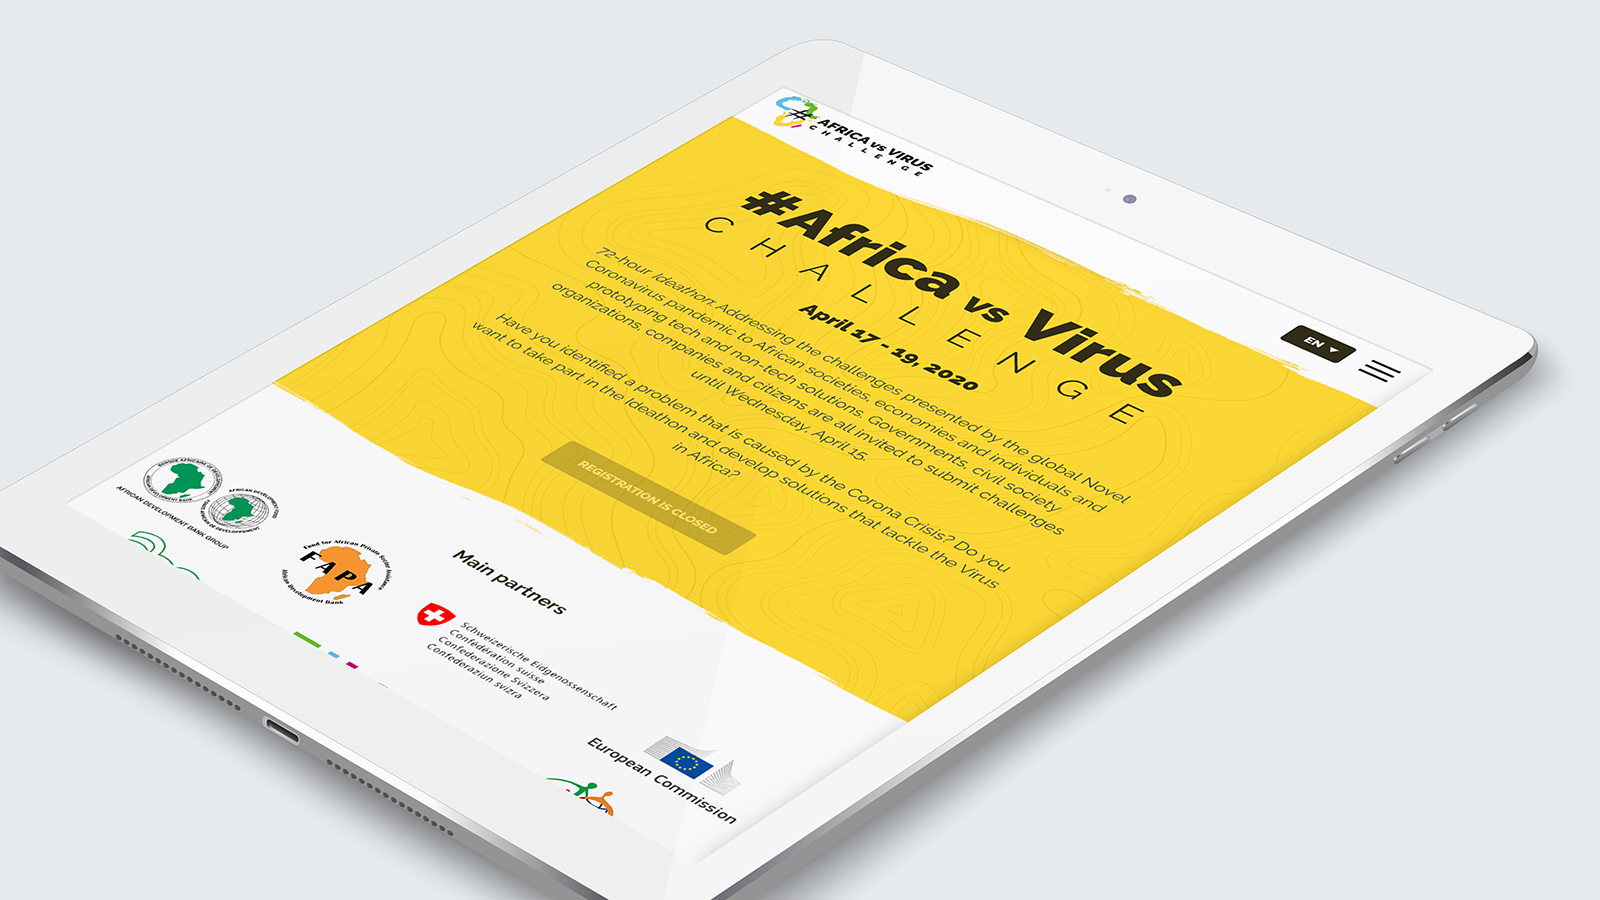 AfricaVsVirus Challenge | Responsive Web Design